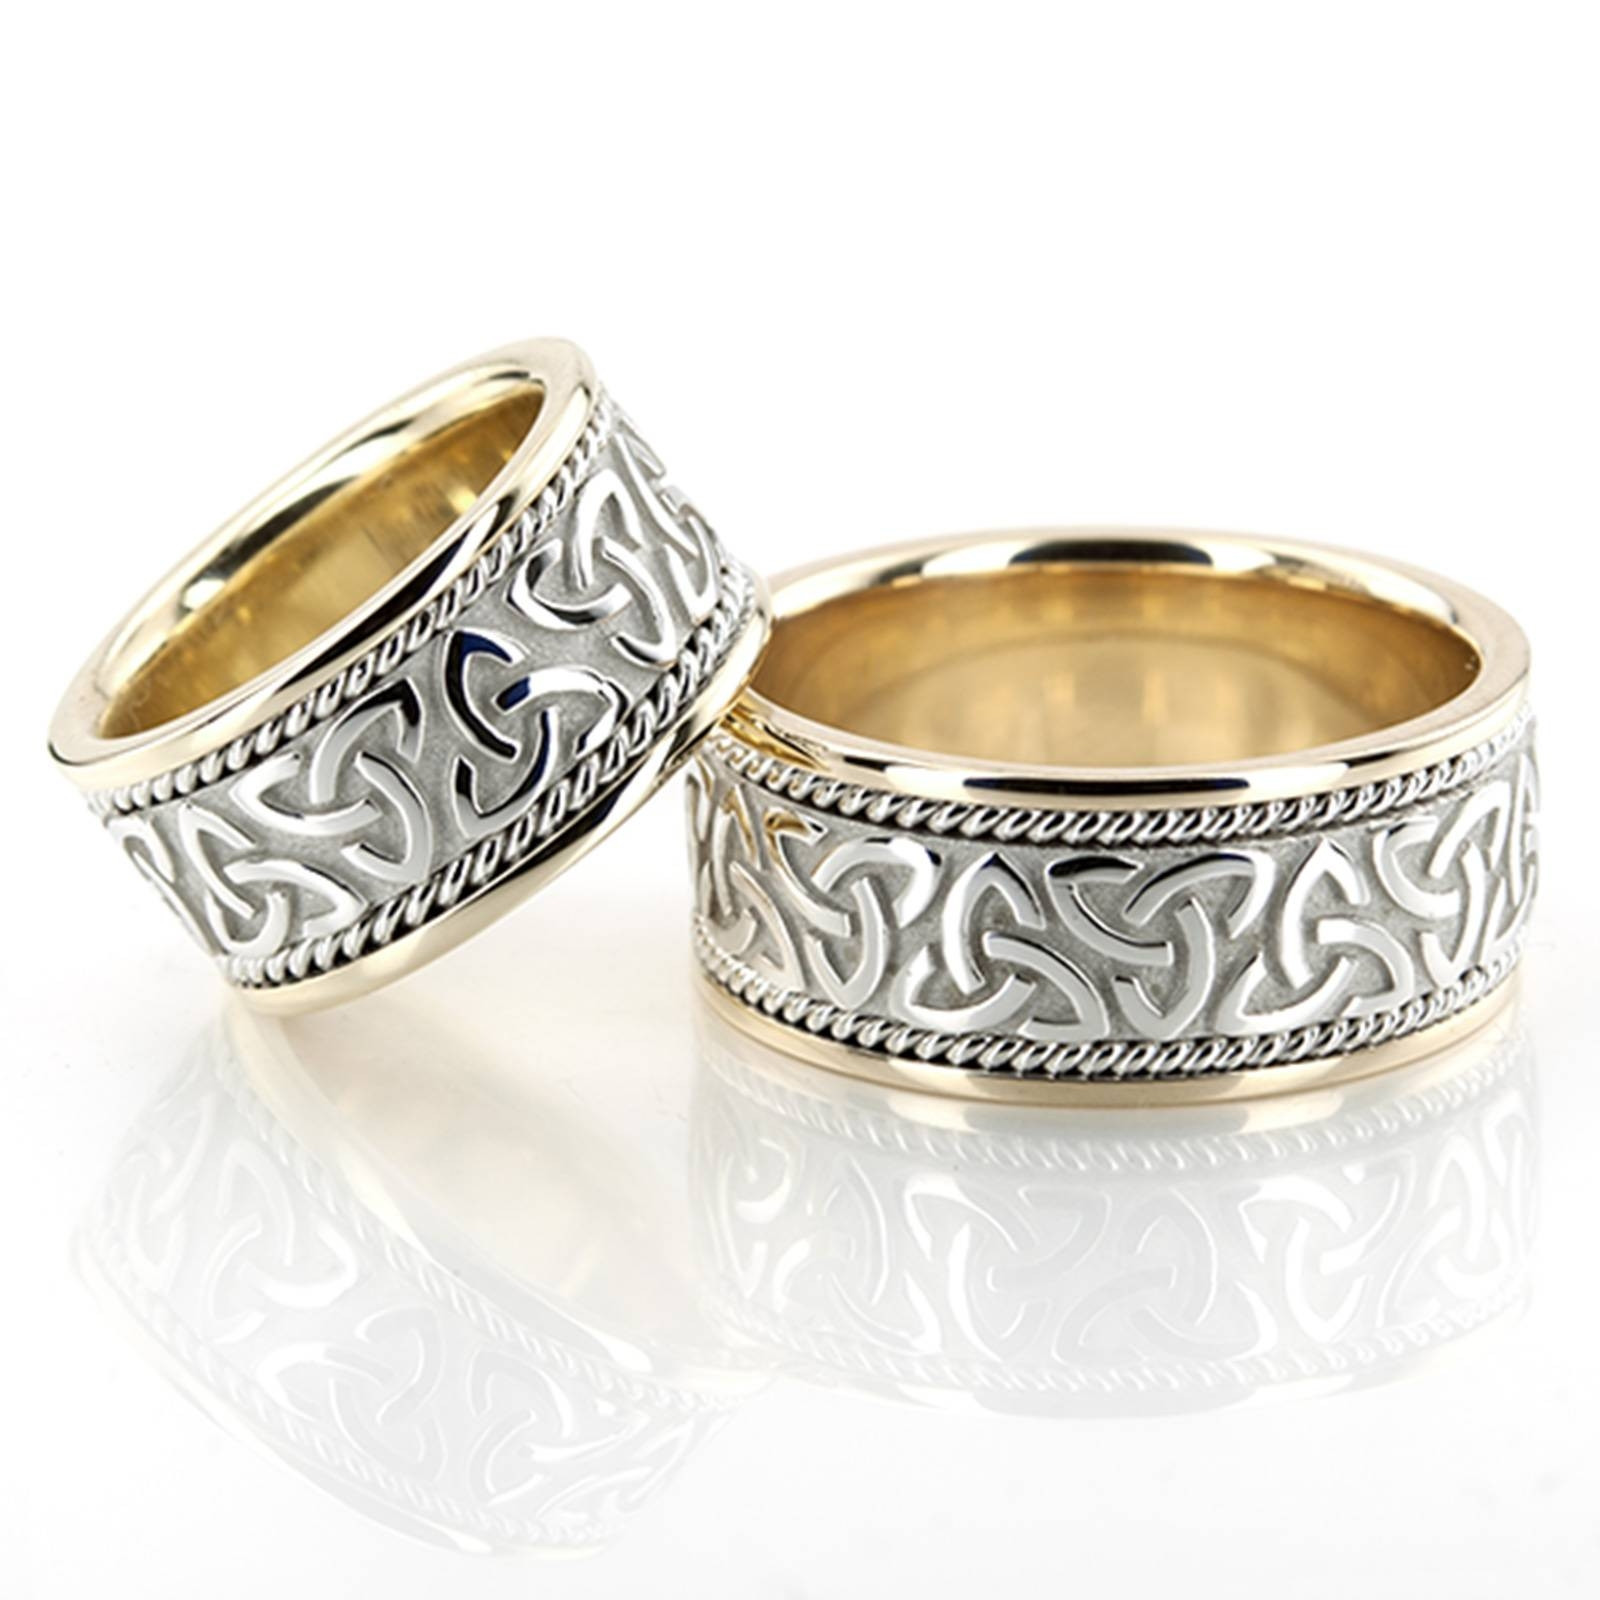 Scottish Wedding Rings Awesome 15 Best Ideas Of Boston Wedding Bands Of Scottish Wedding Rings 